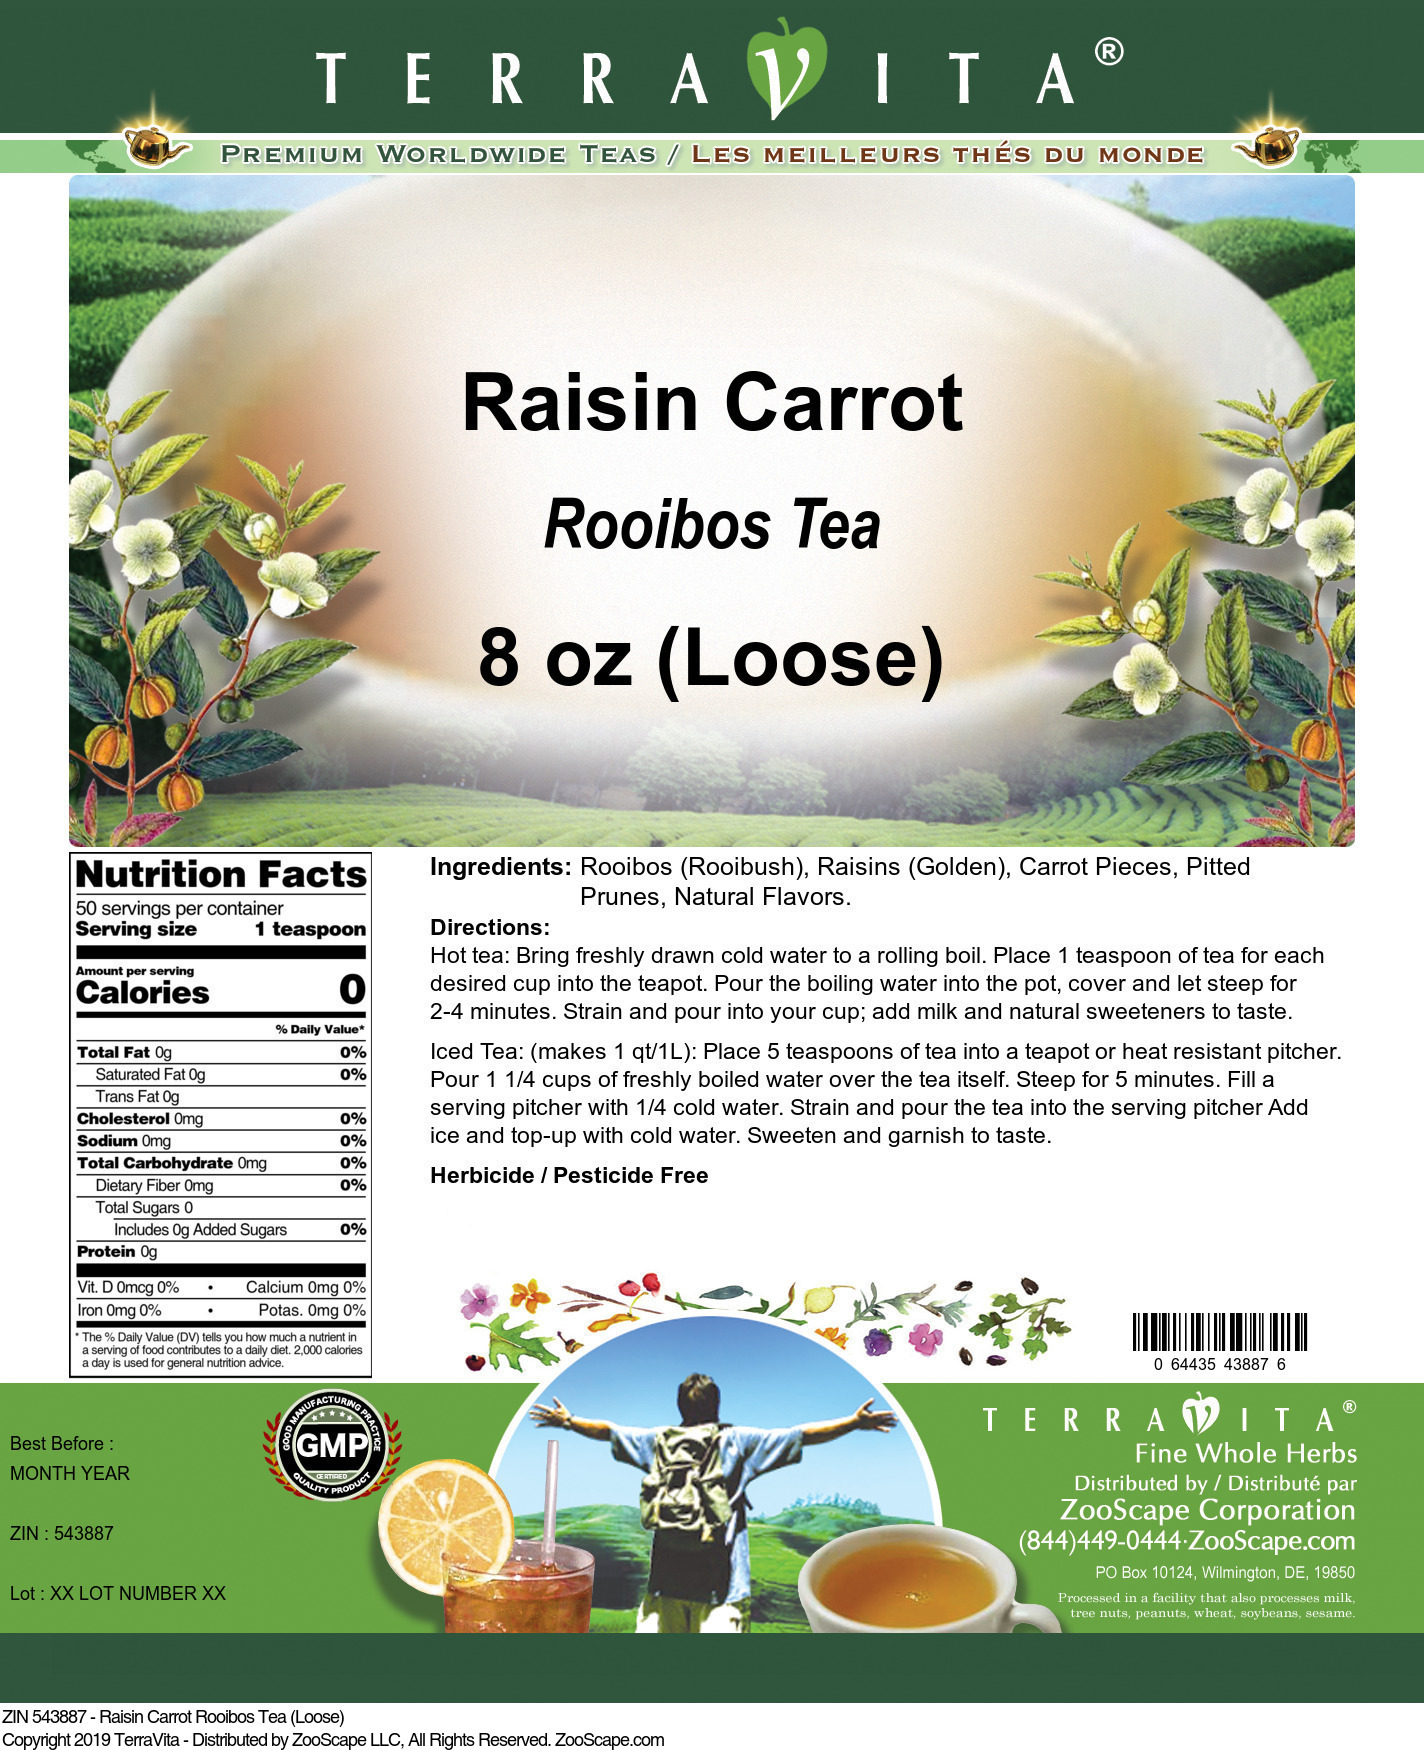 Raisin Carrot Rooibos Tea (Loose) - Label